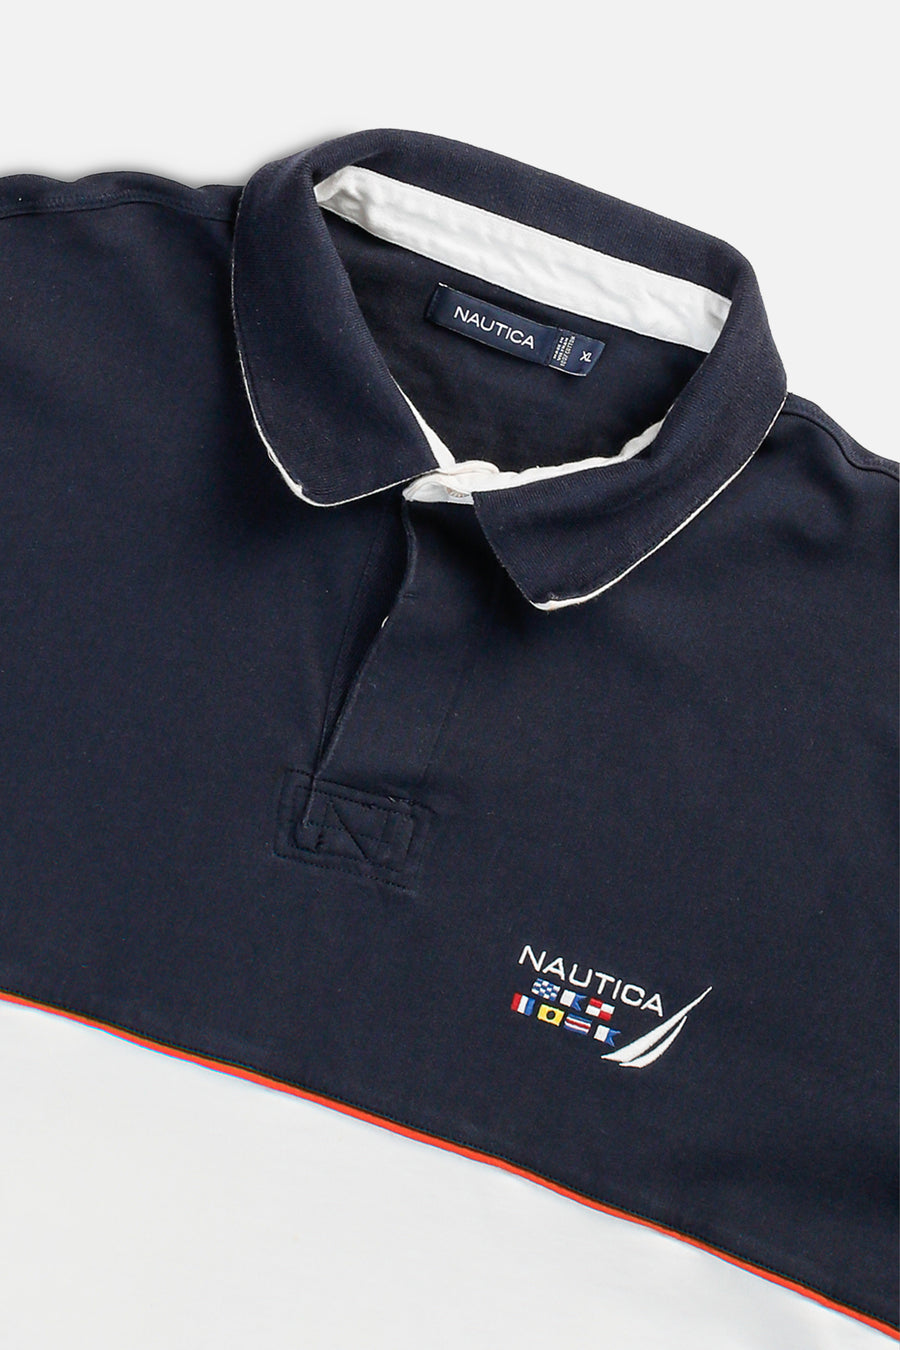 Vintage Nautica Rugby Shirt - XL